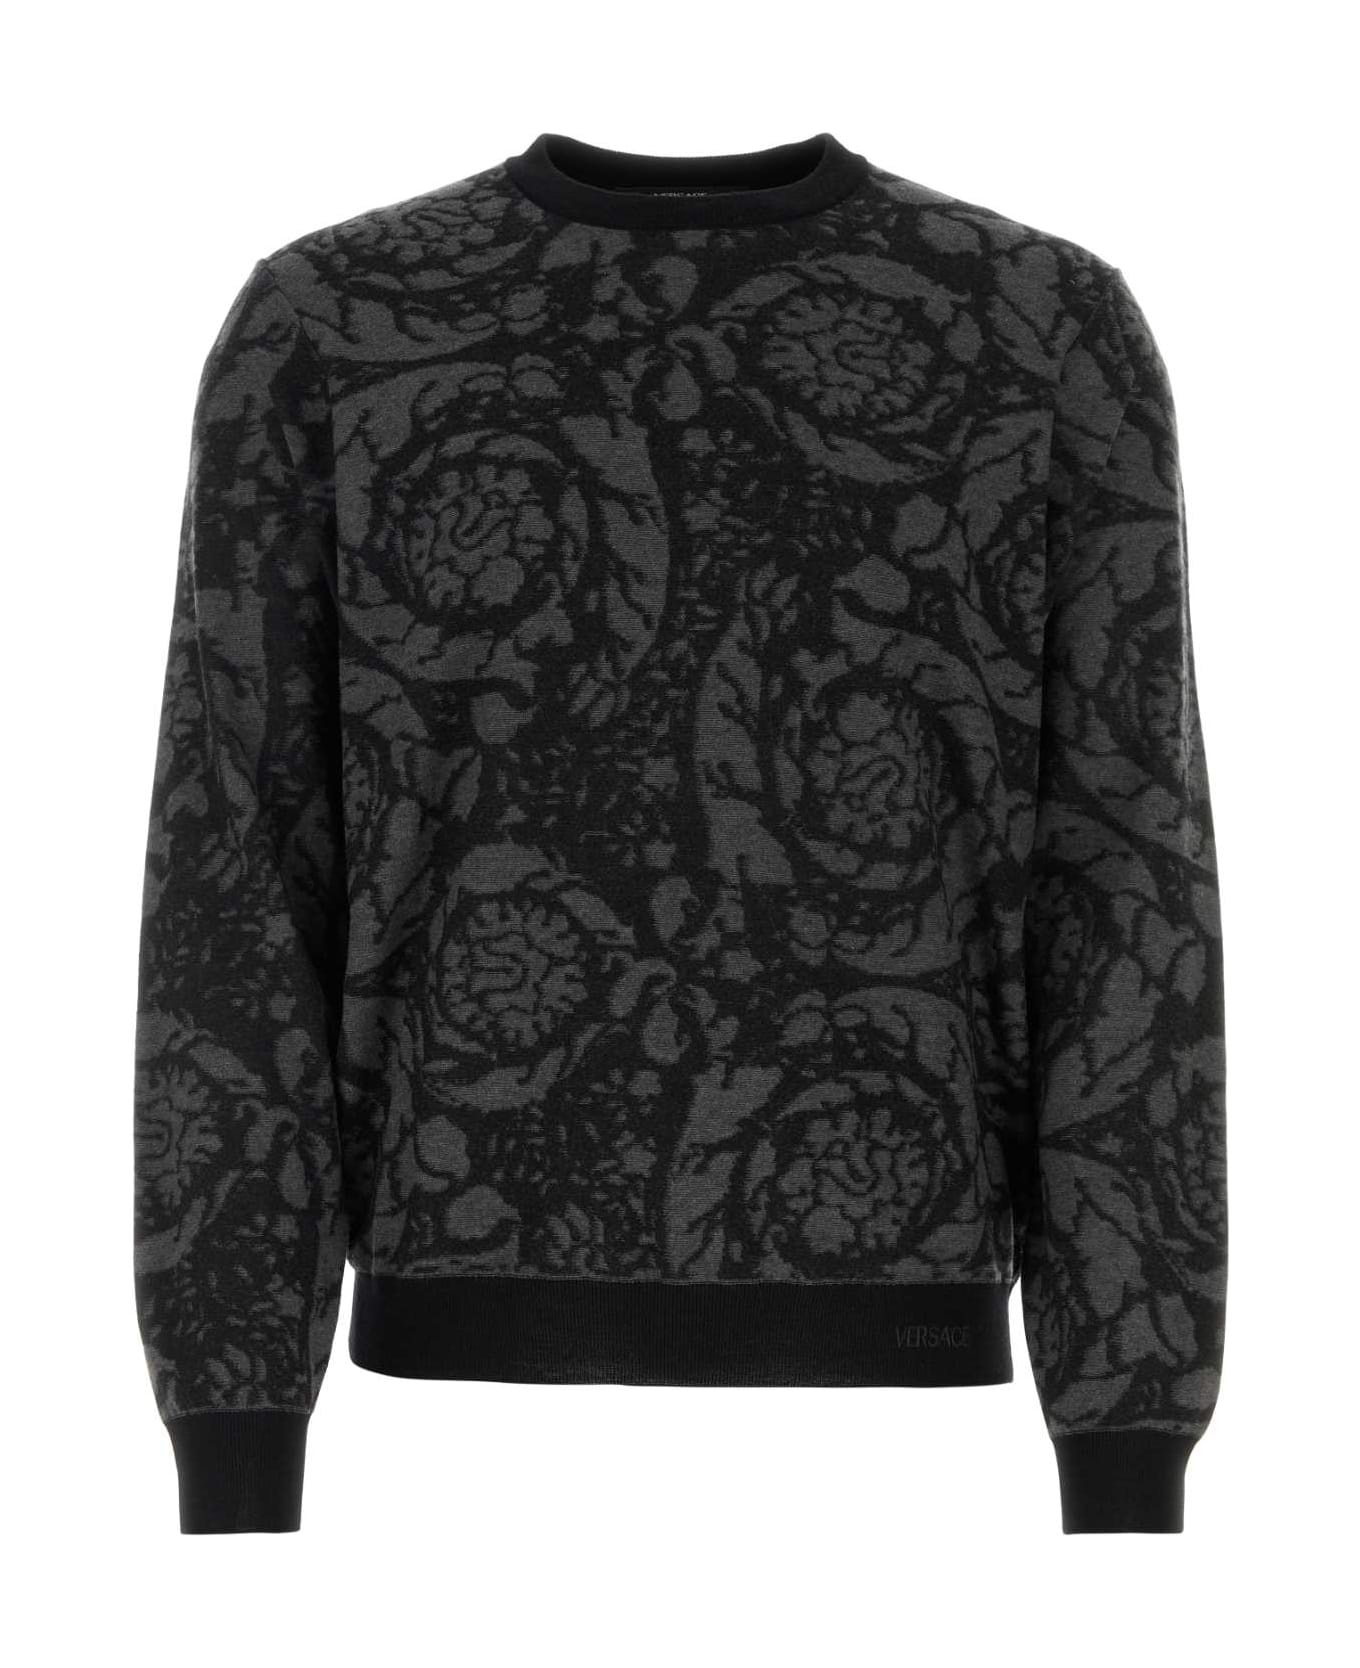 Versace Embroidered Wool Blend Sweater - BLACKGREY